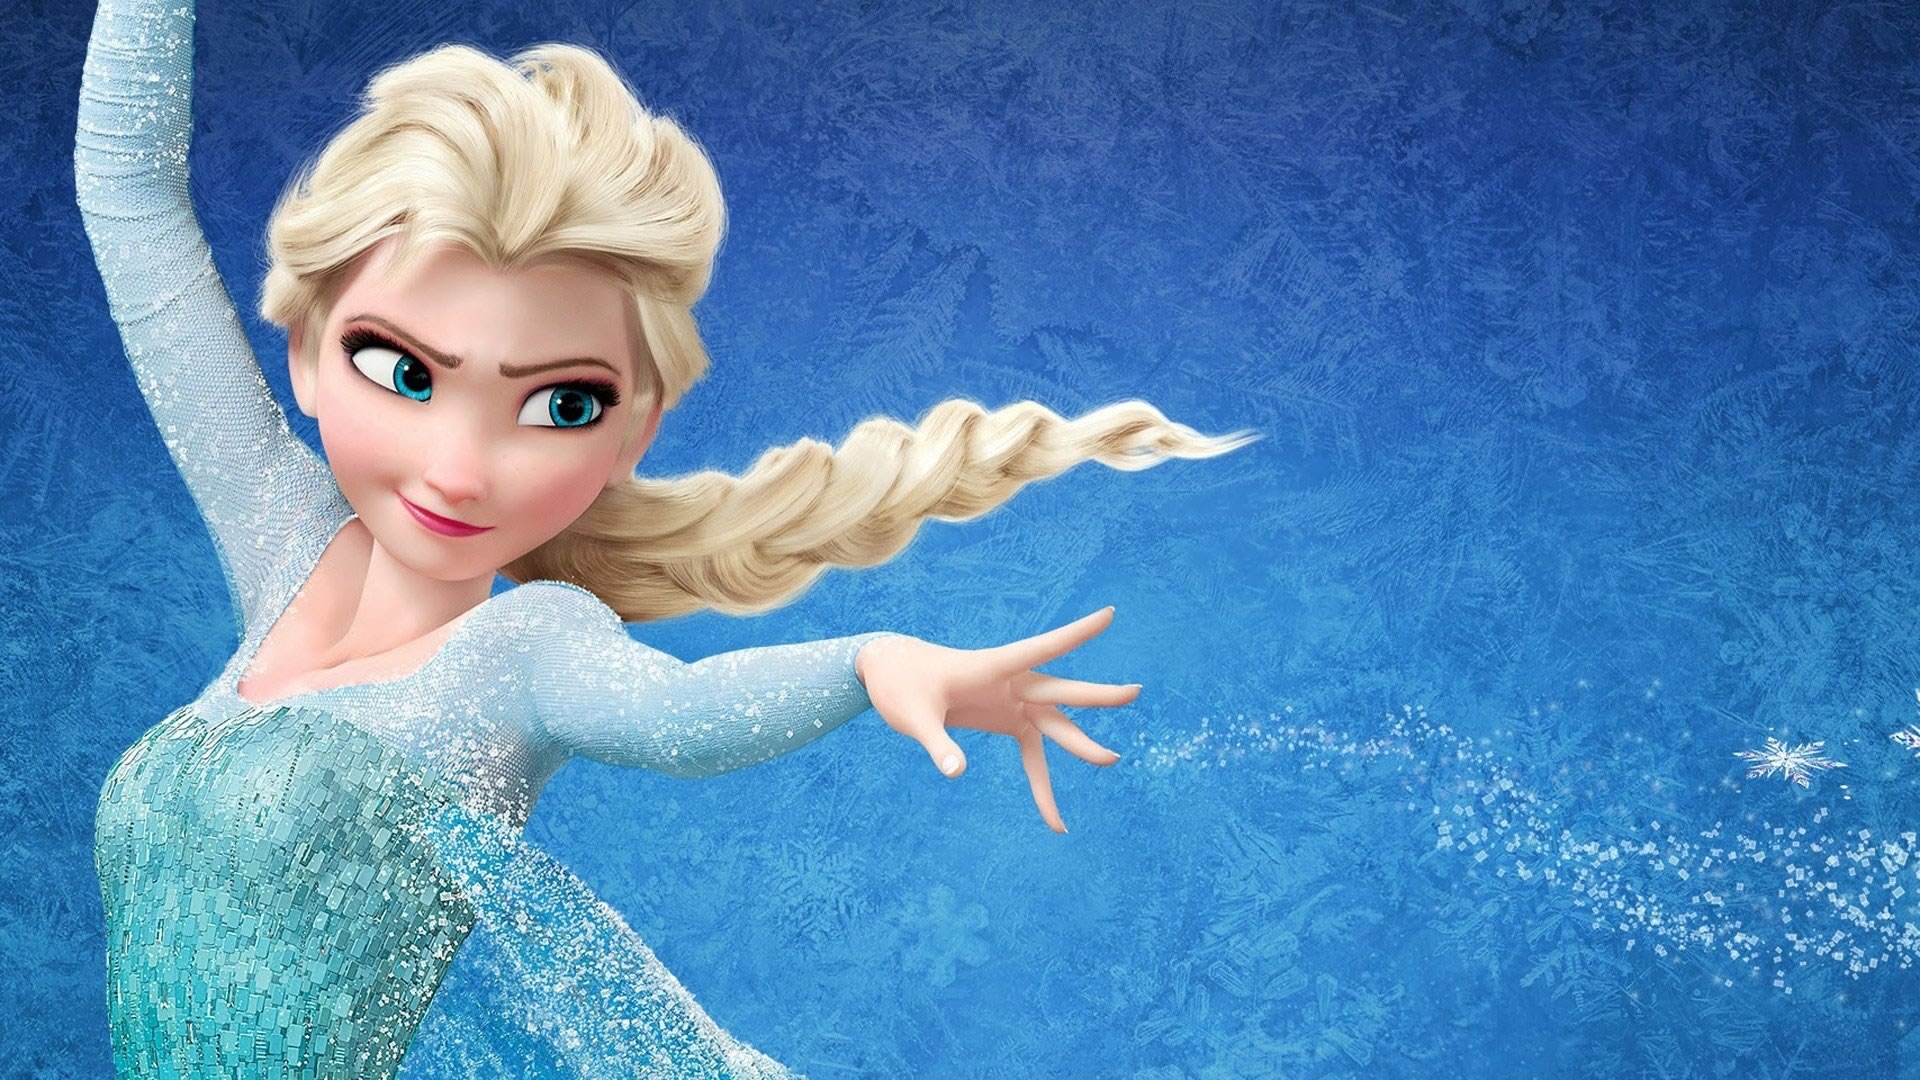 download wallpaper: Frozen – Elsa wallpaper